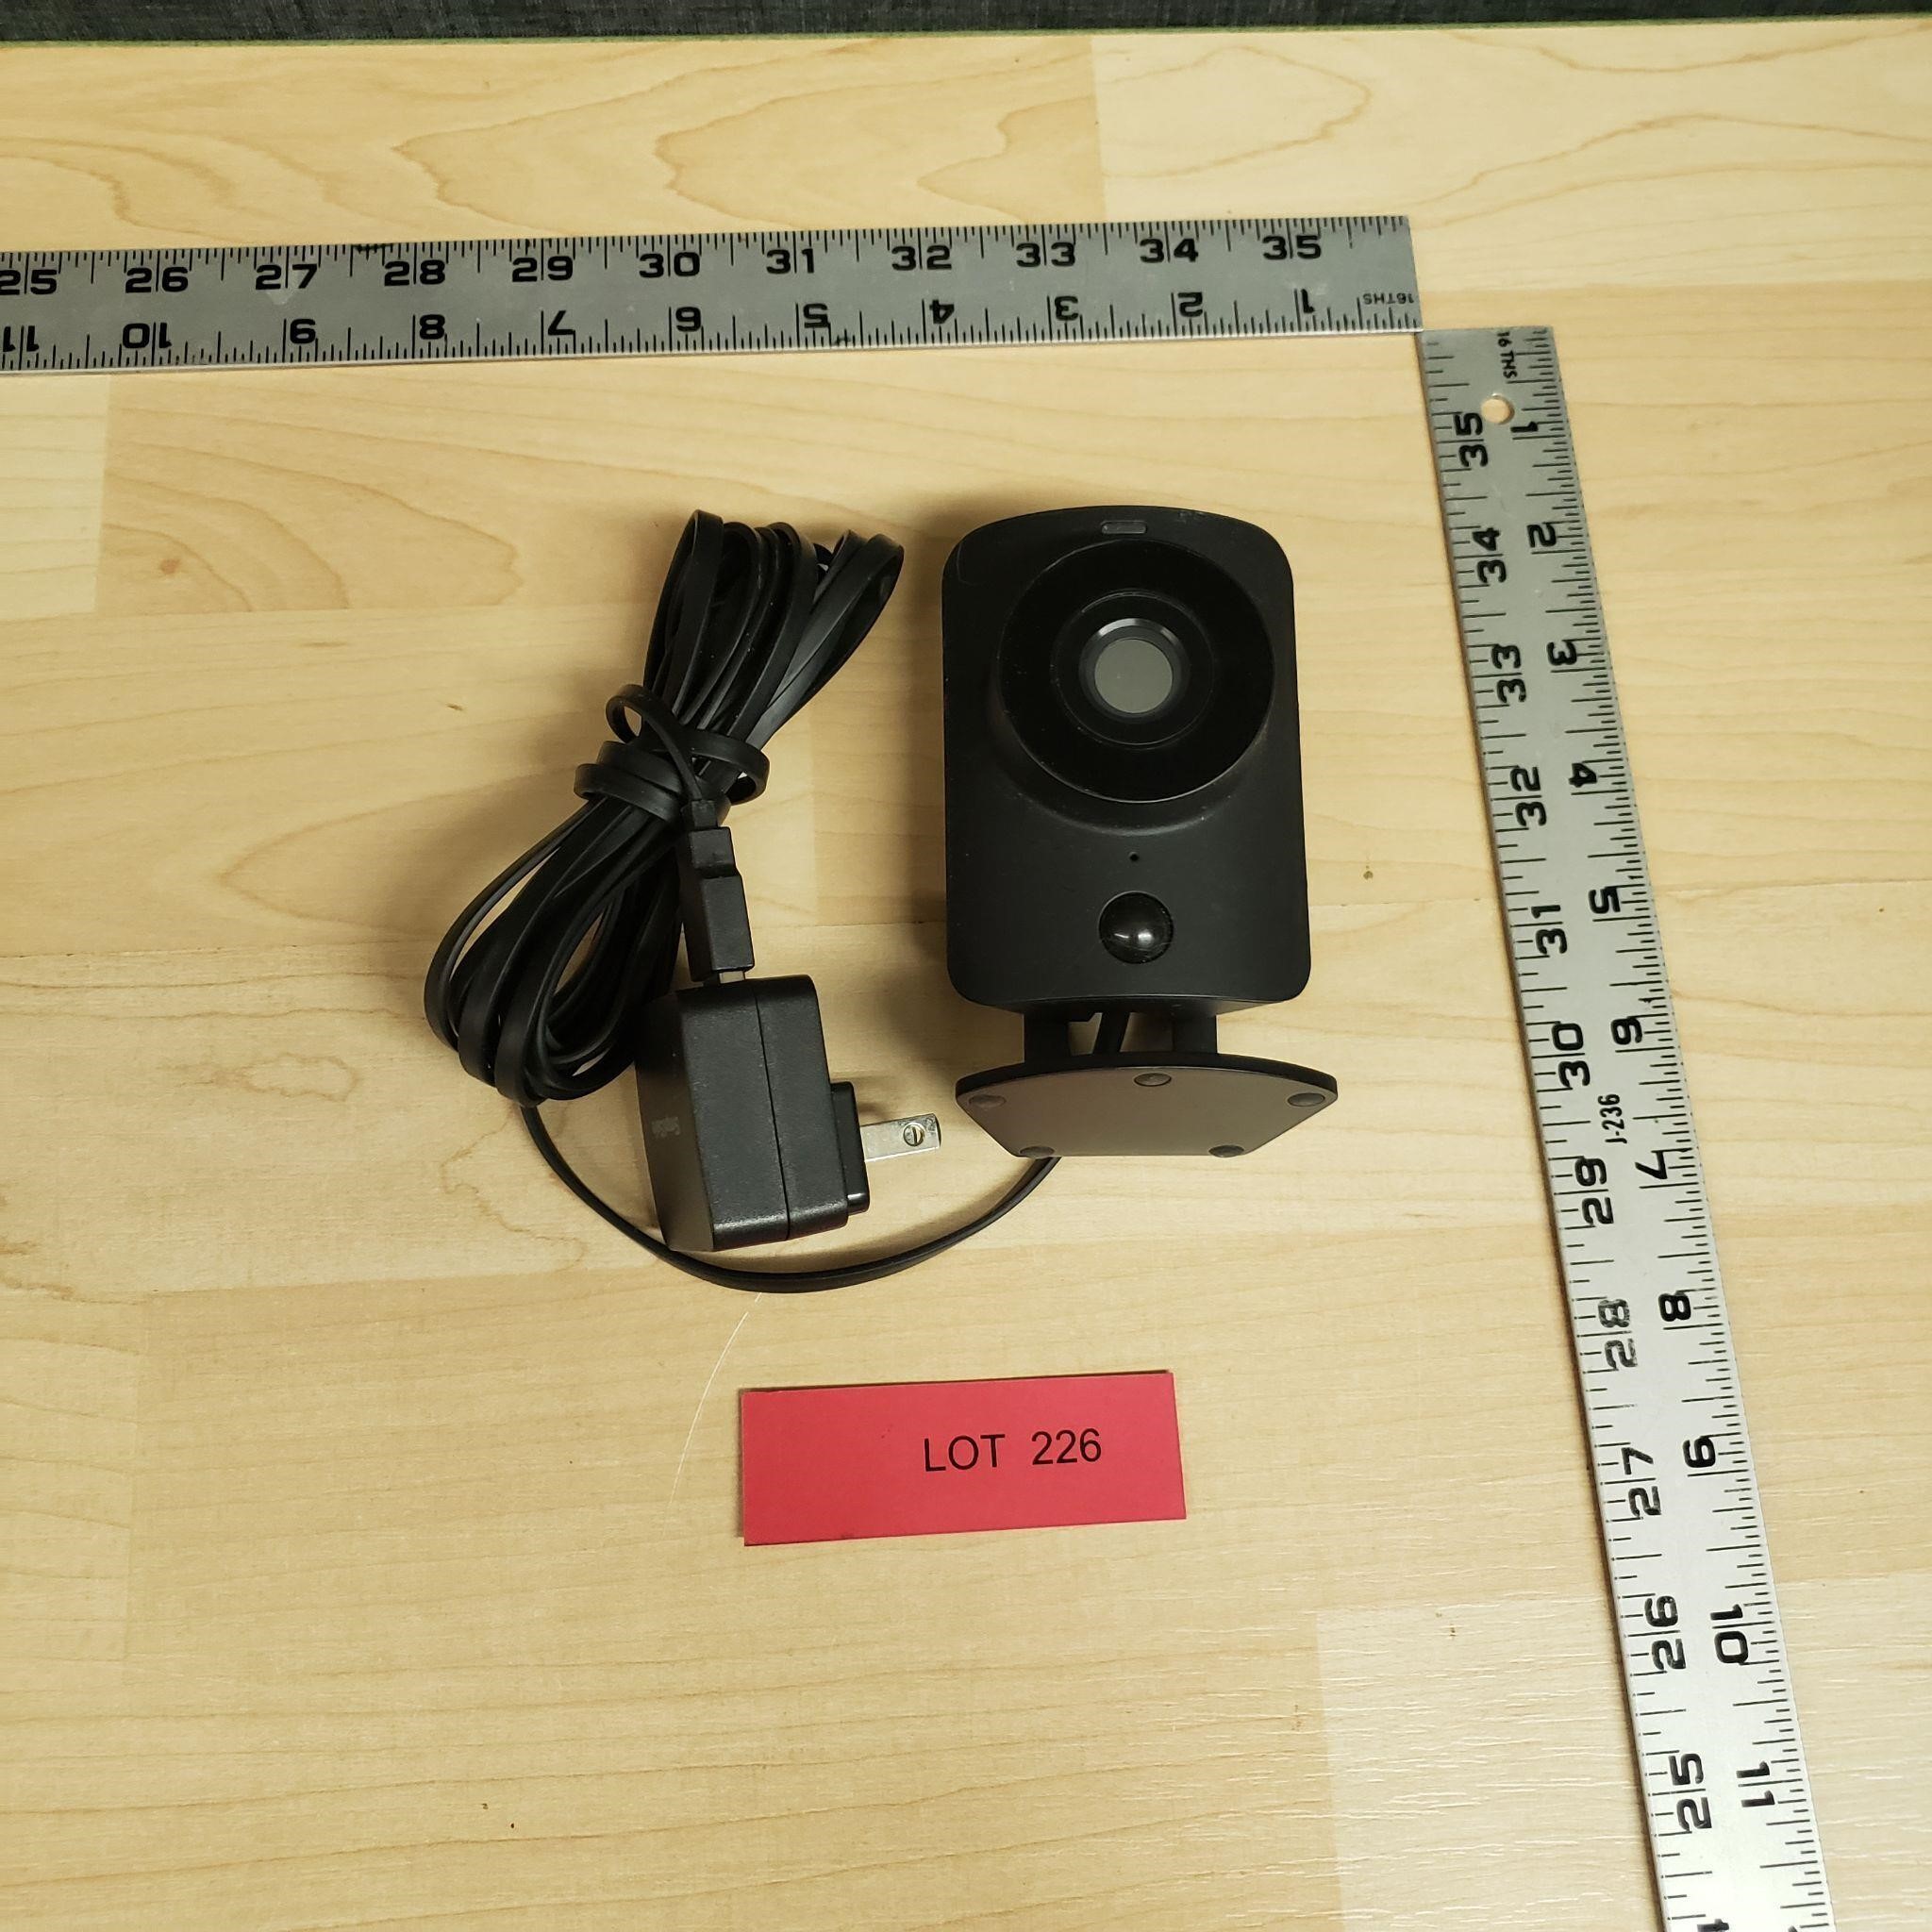 Simplisafe SSCM1 Indoor Security Camera